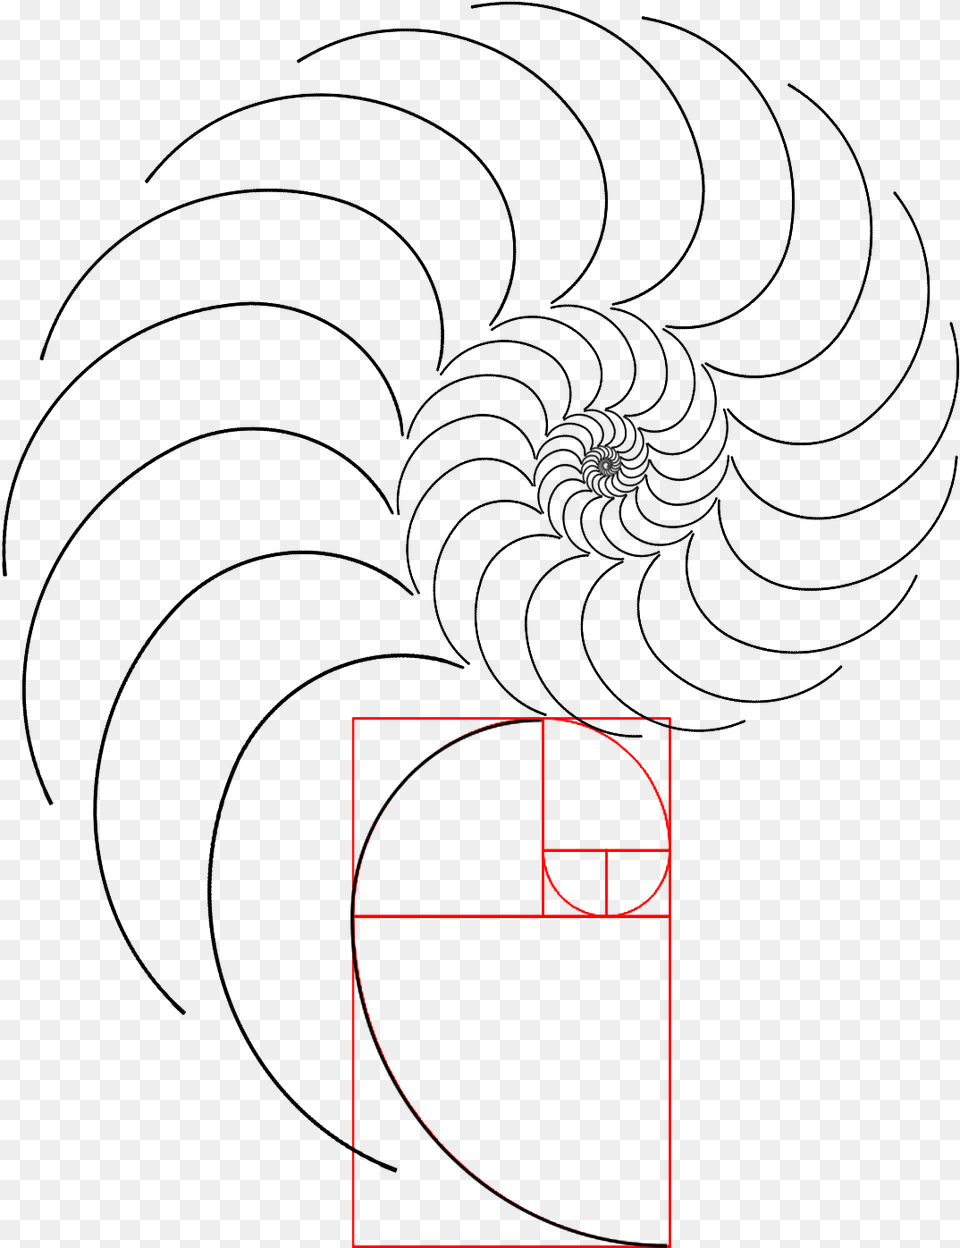 Spiral Png Image